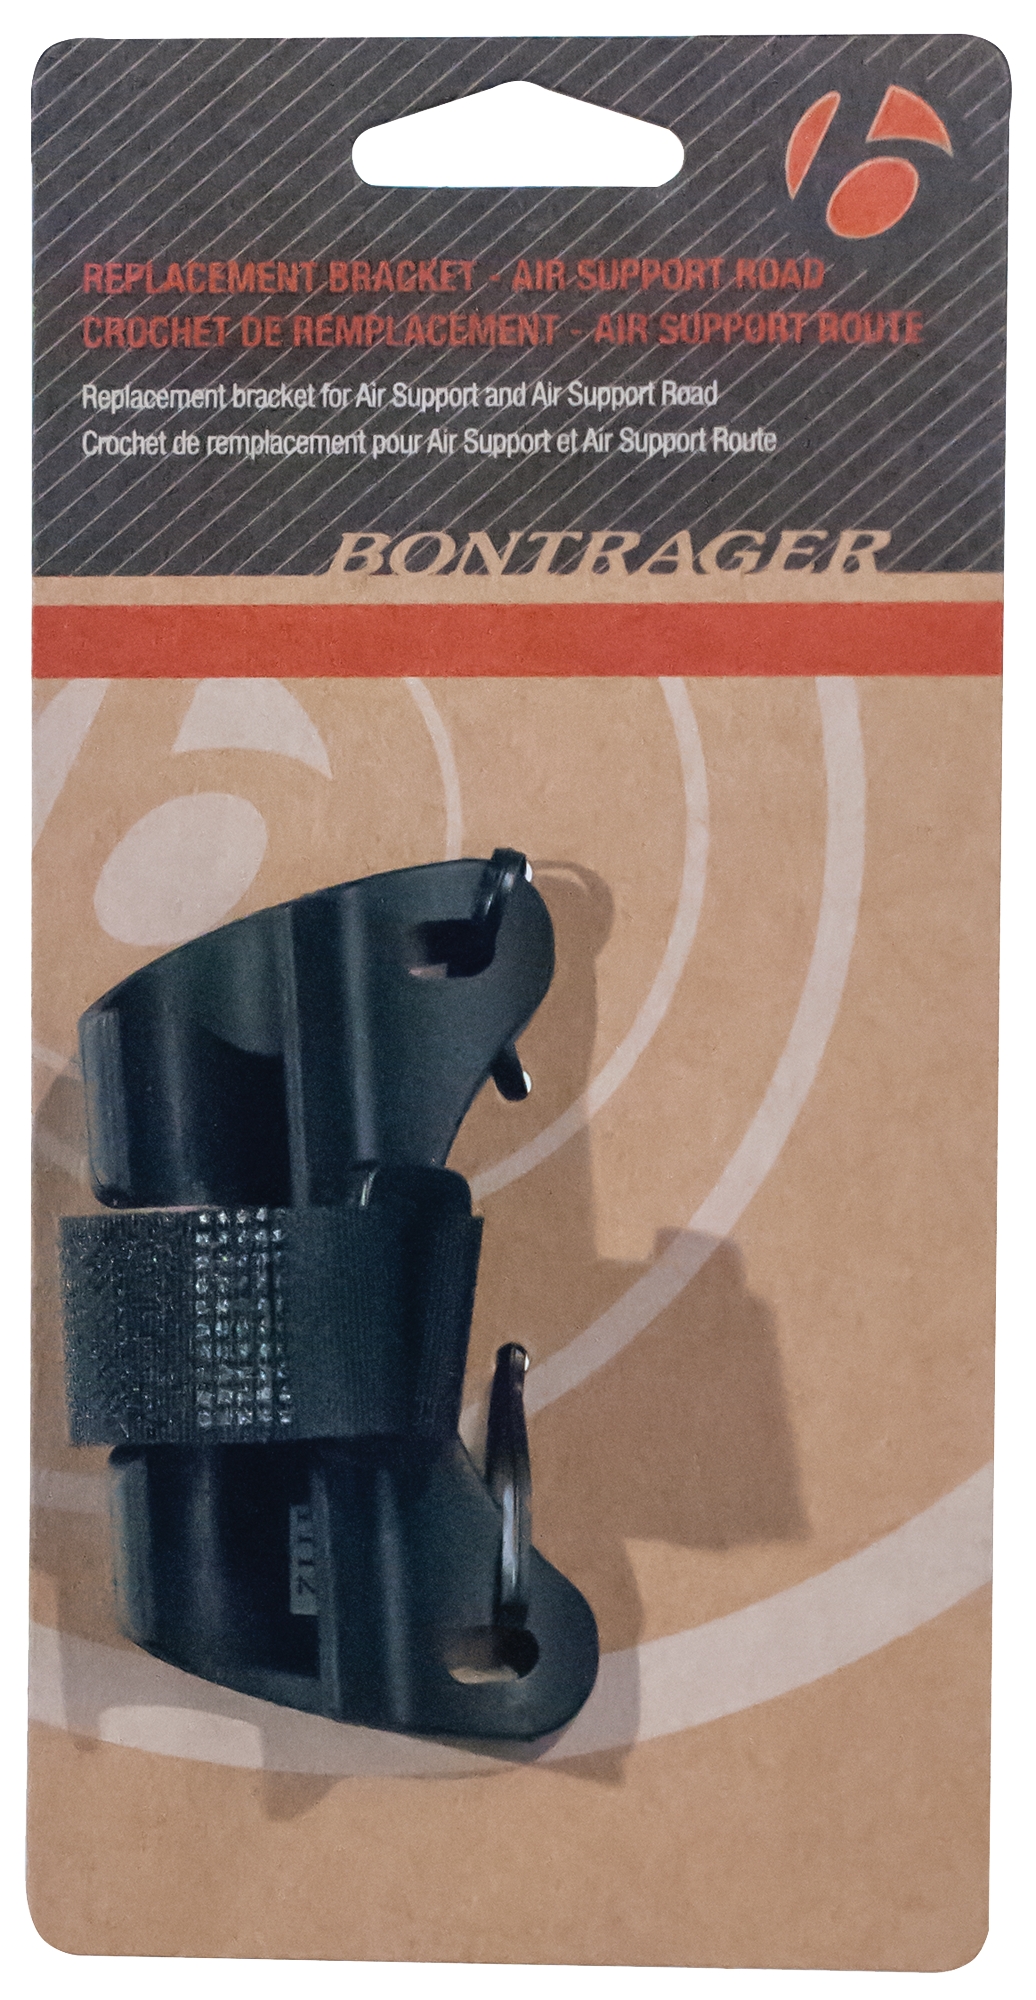 bontrager bike pump head replacement